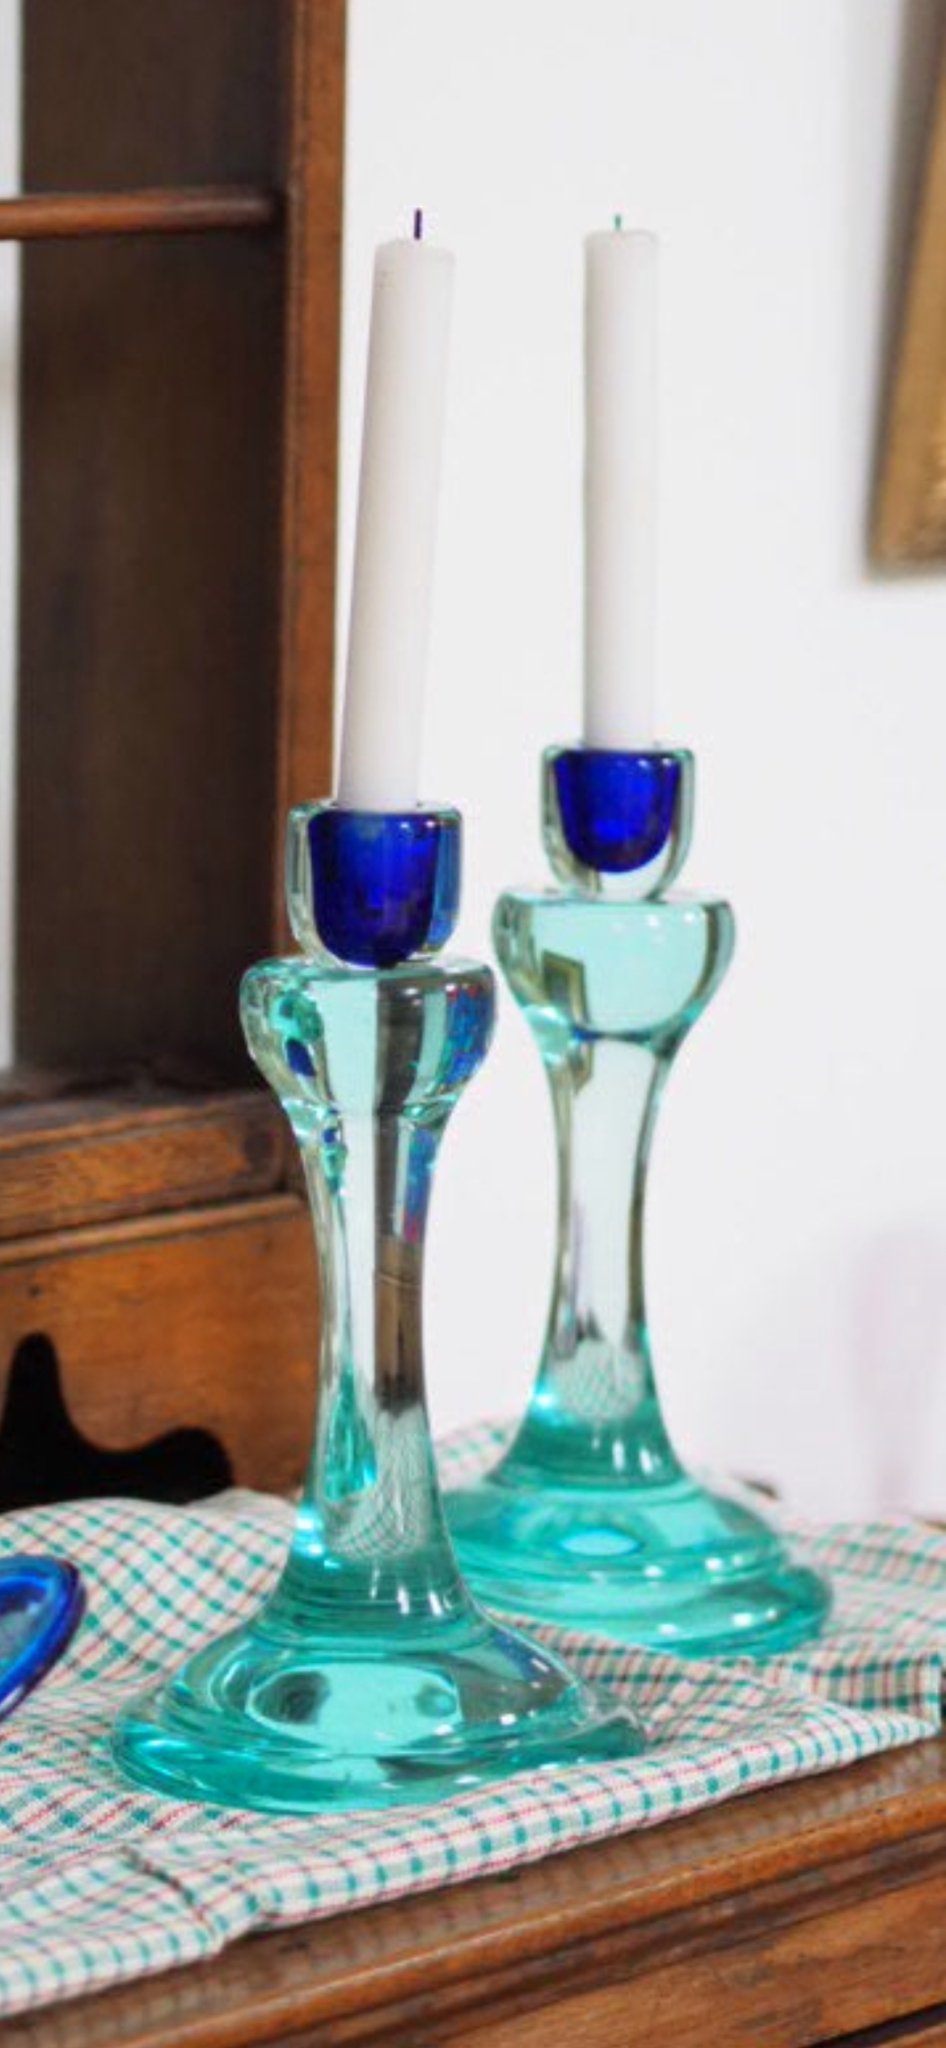 Vintage heavy glass candleholders - Natalia Willmott